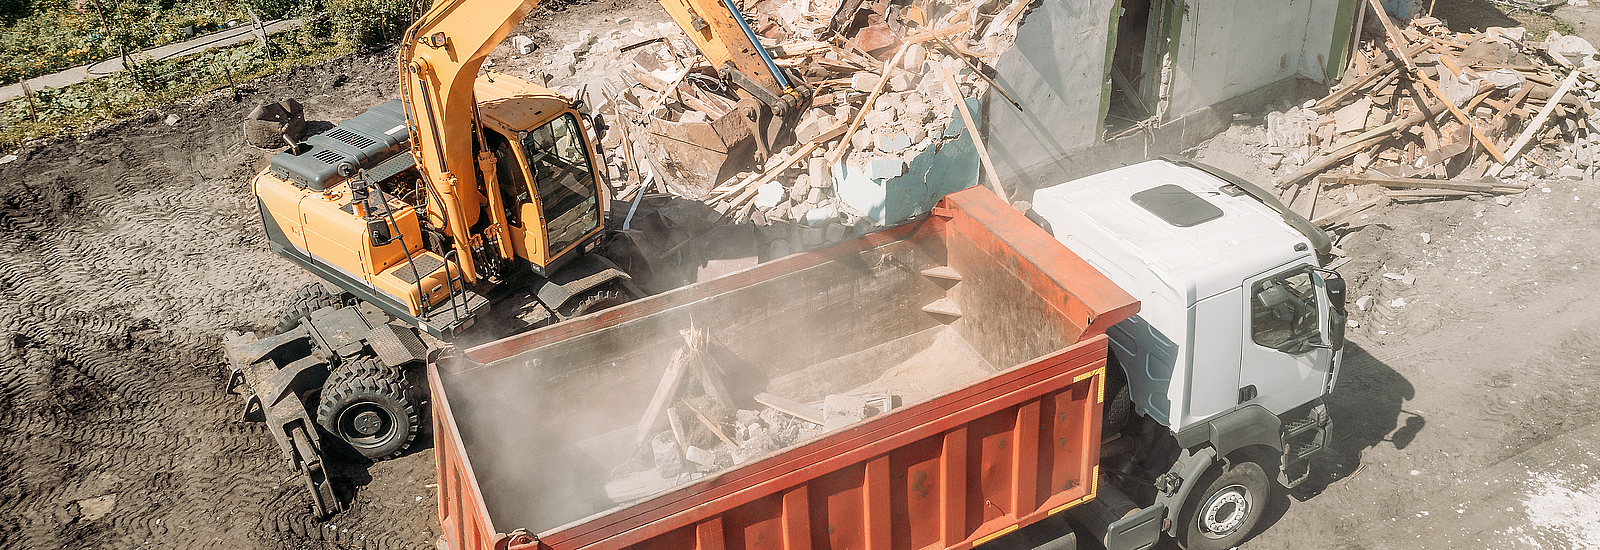 Excavator loads construction debris of old building after destruction in dump truck, aerial view